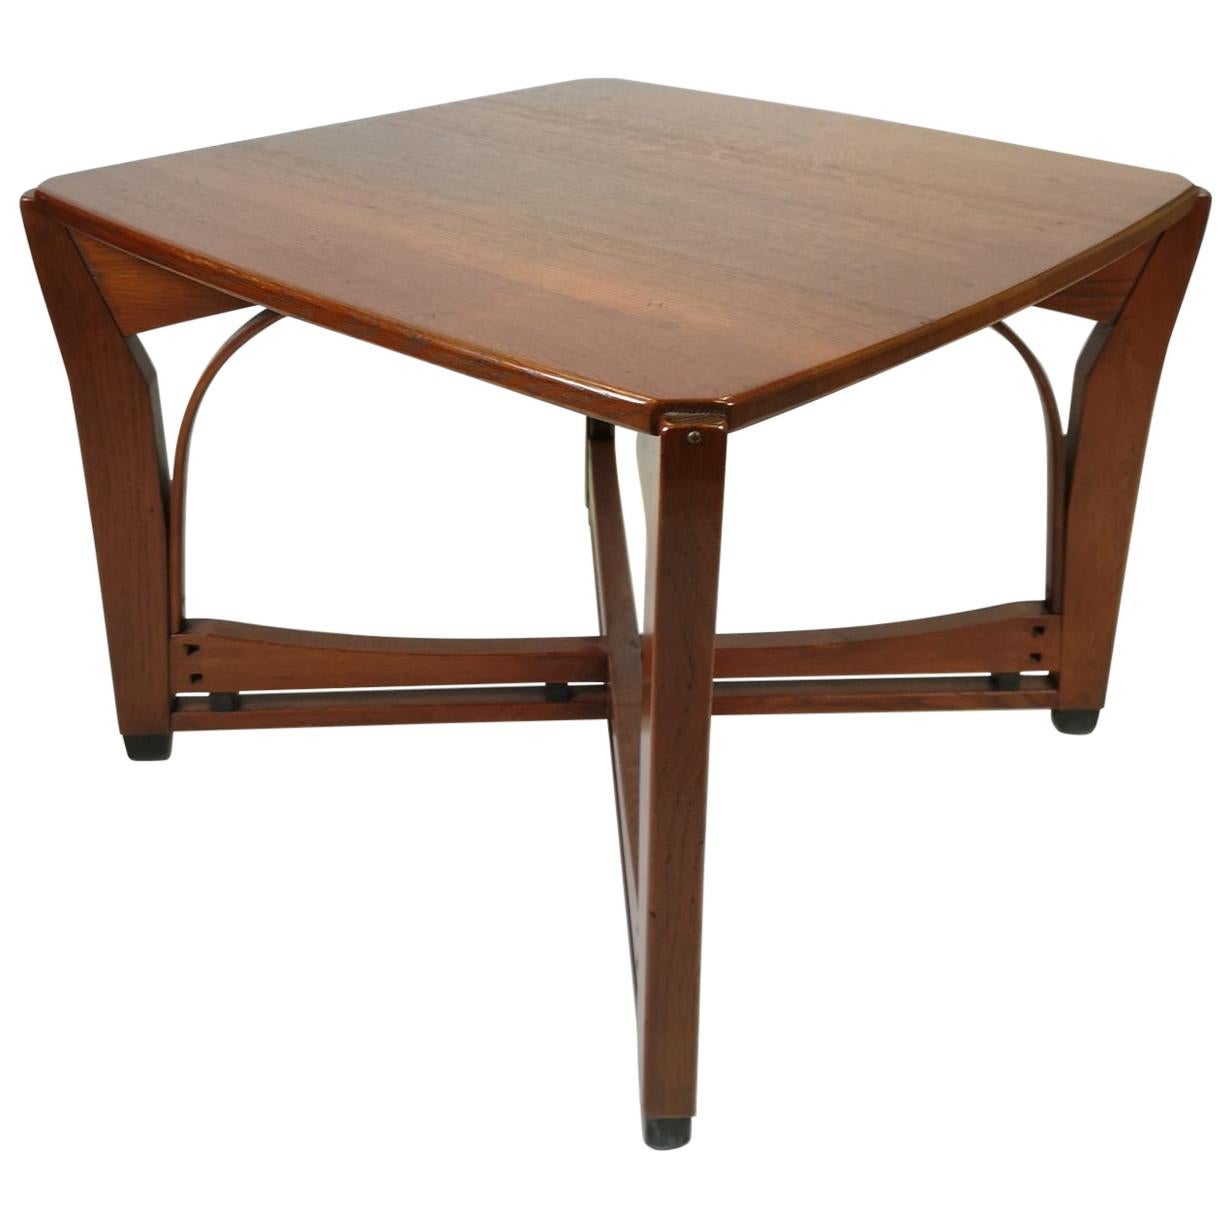 Art Nouveau Style Wooden Coffee Table by Schuitema & Zonen